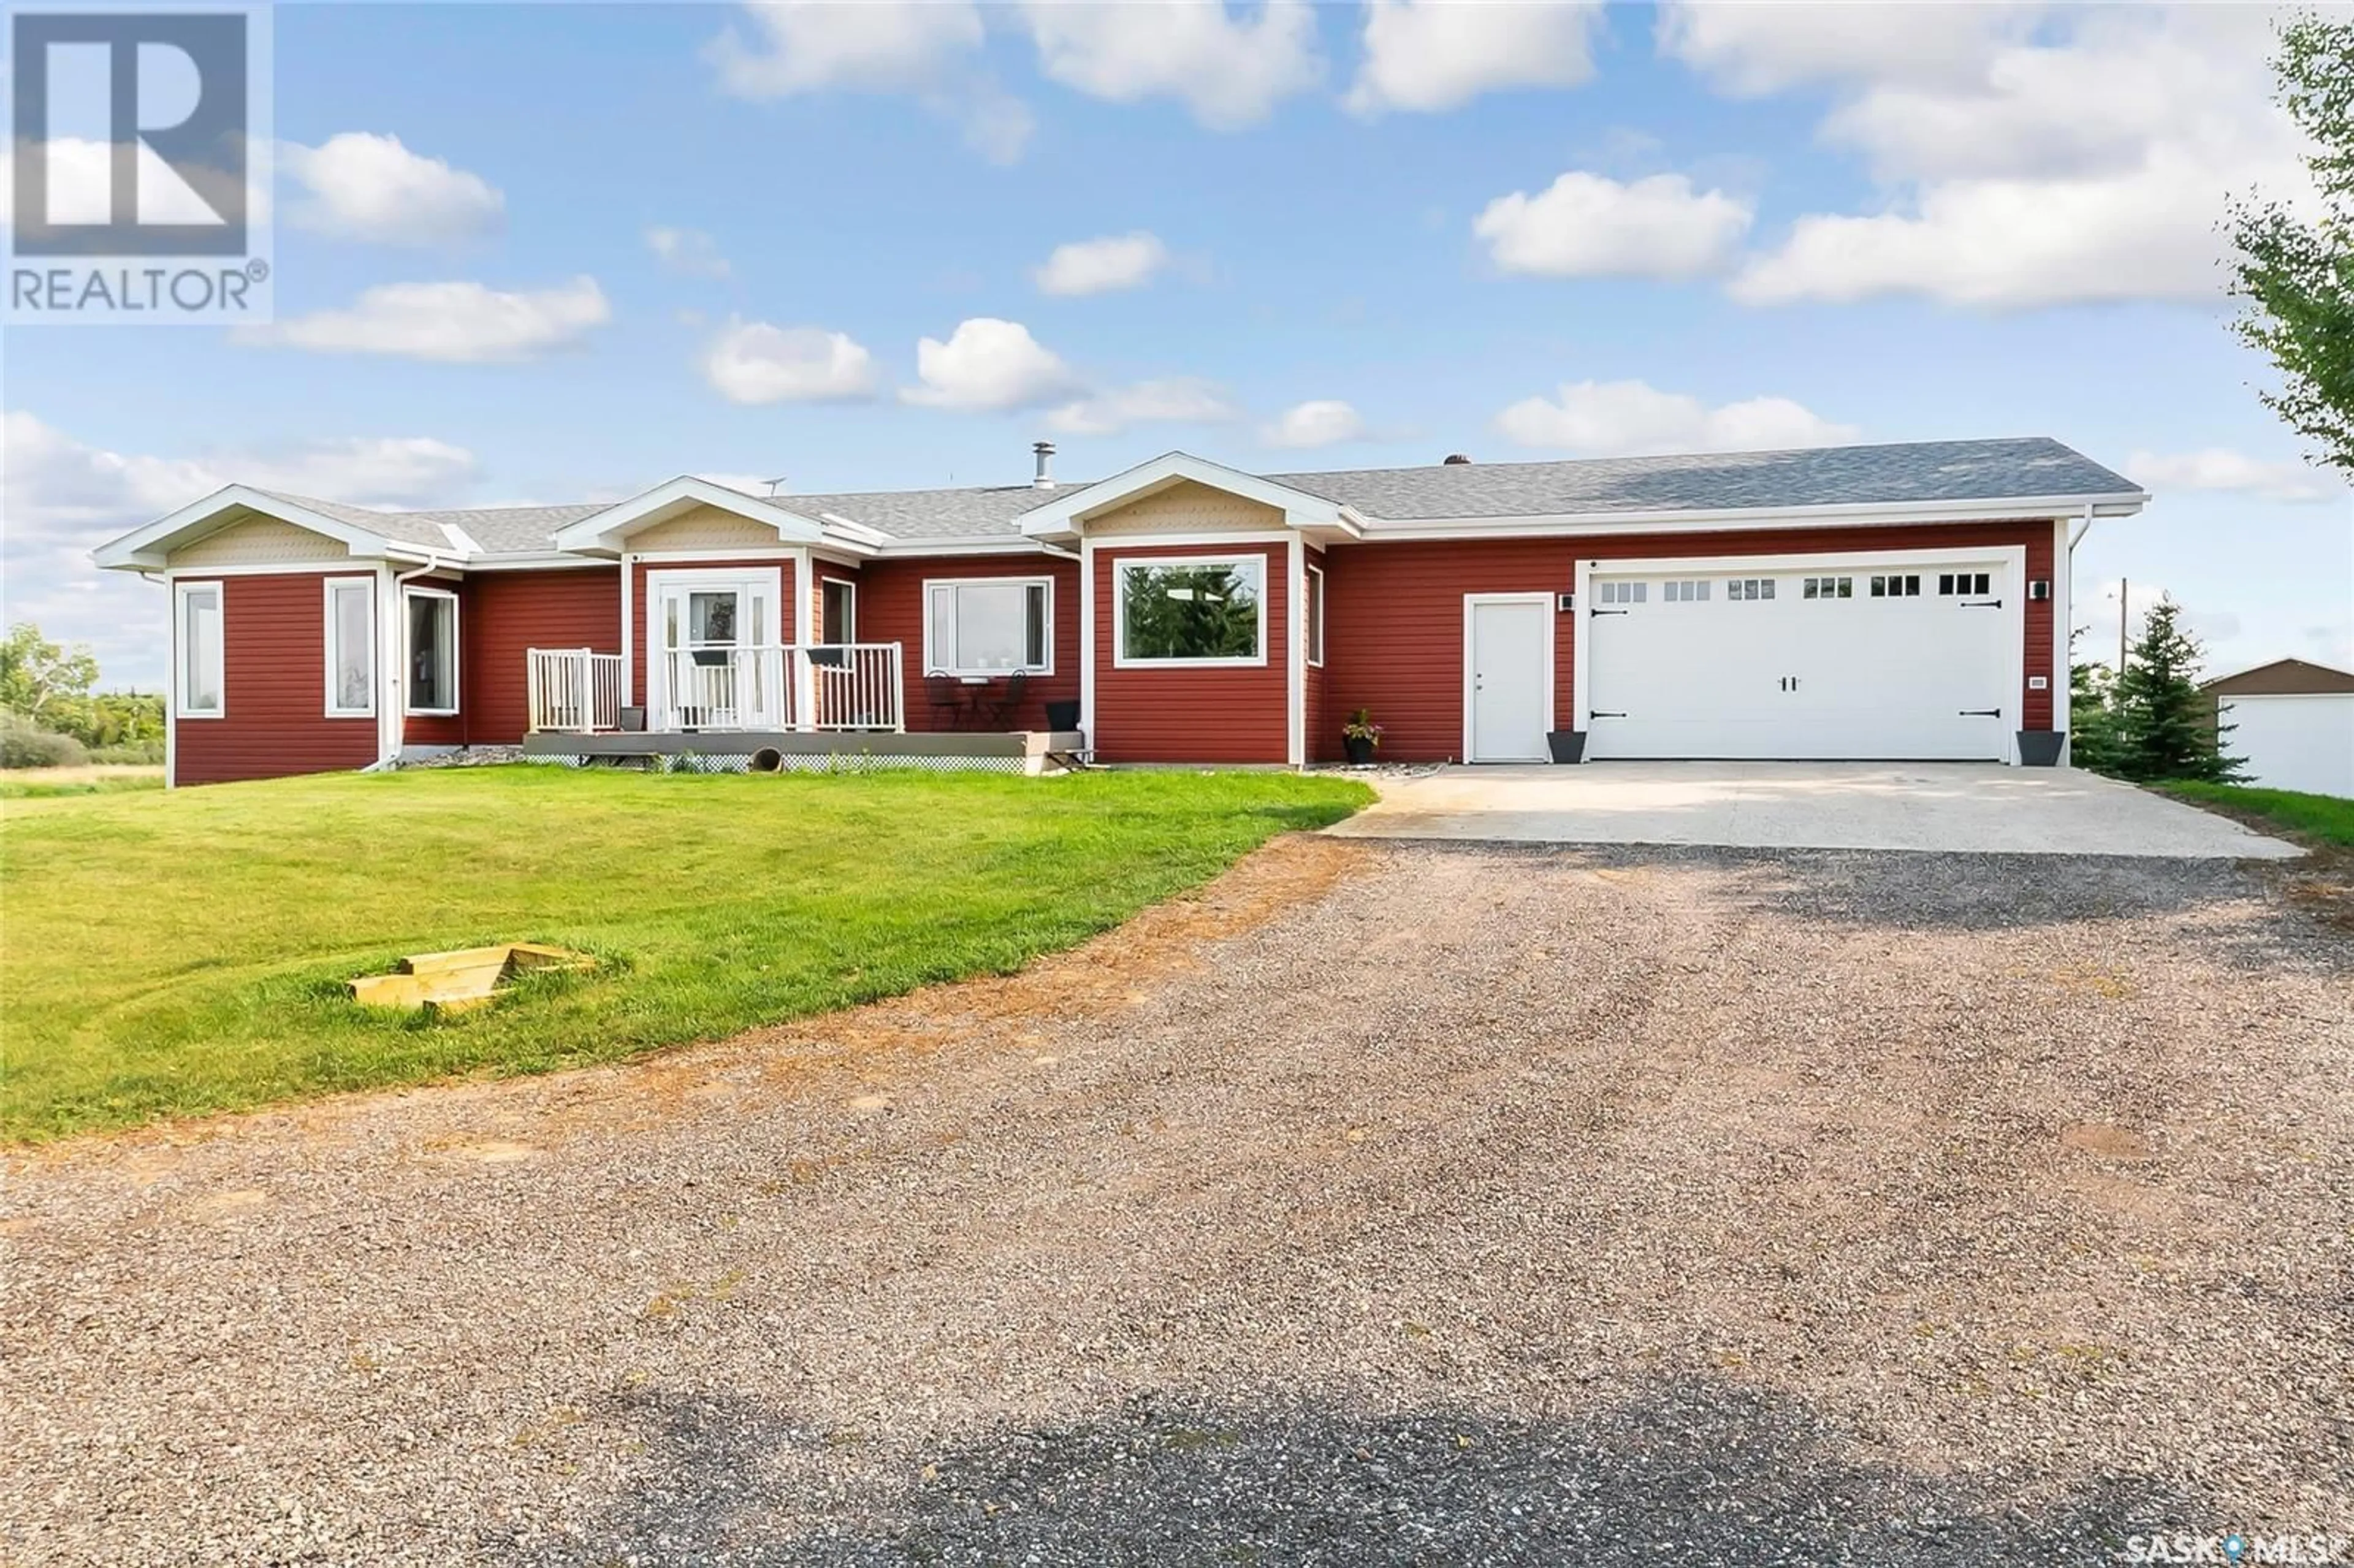 Home with vinyl exterior material for Mattern Acreage - 6.04 Acres, Edenwold Rm No. 158 Saskatchewan S0G3Z0